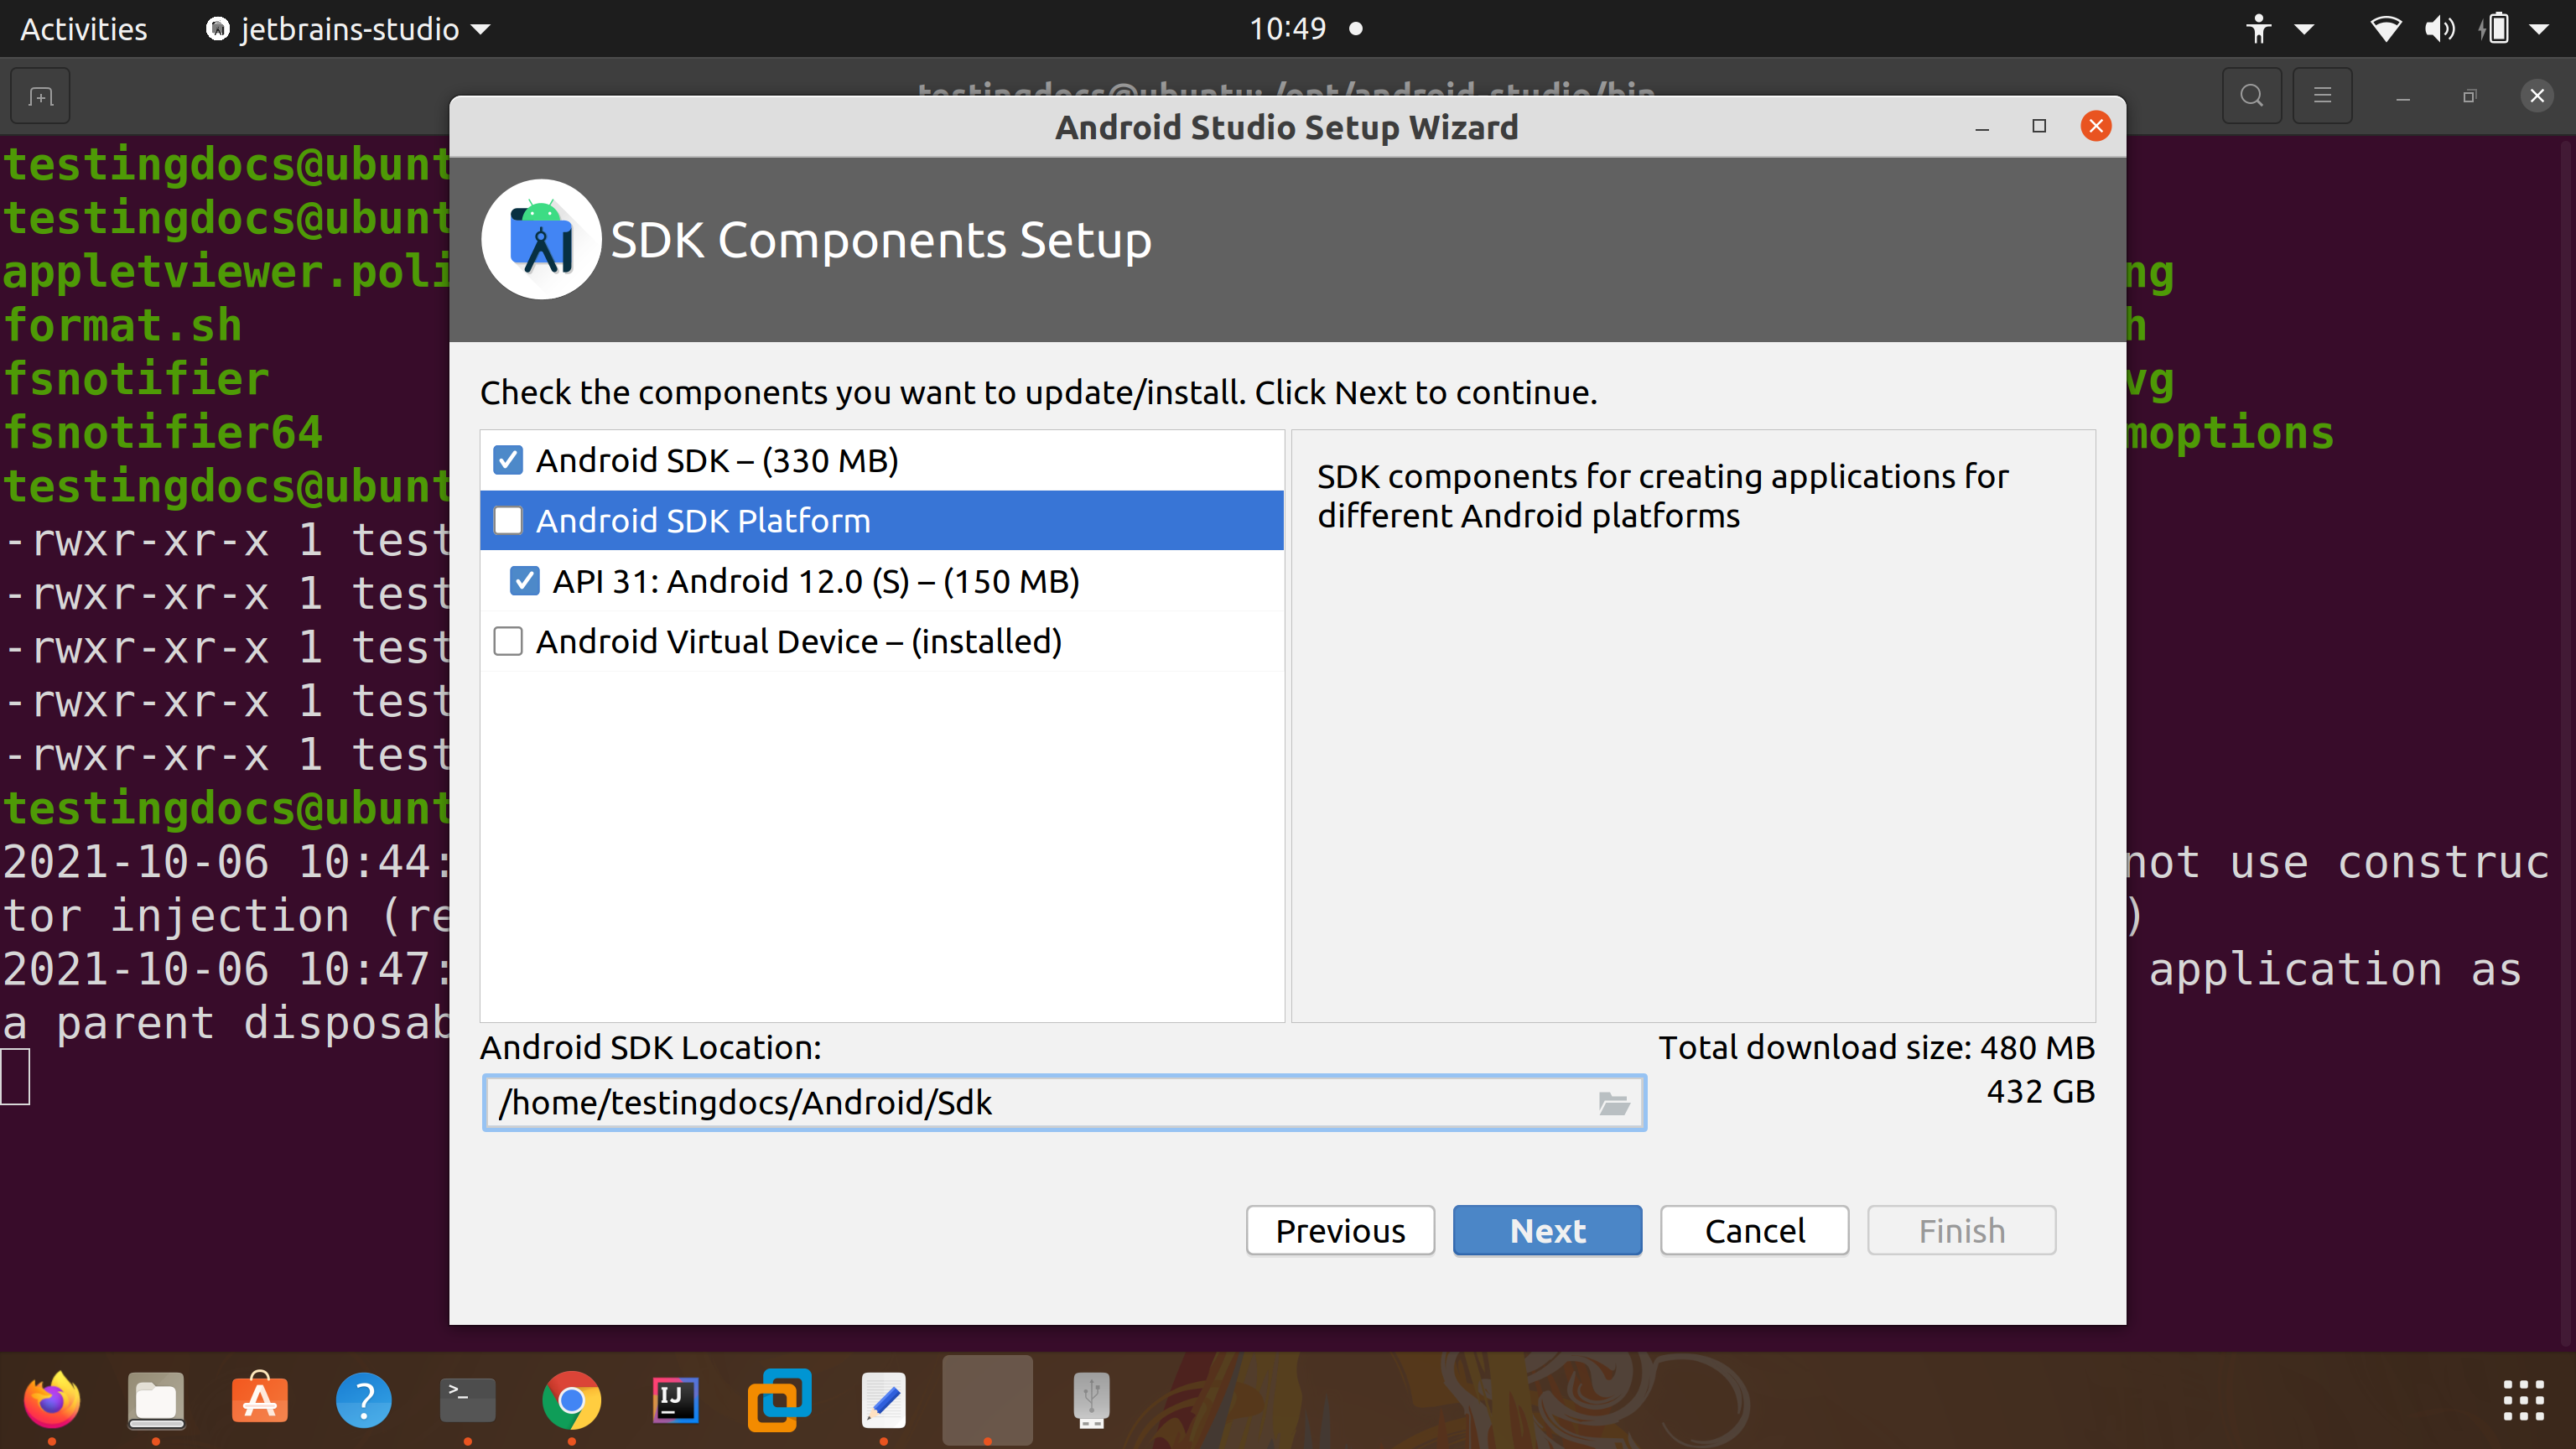 Android Studio SDK Components